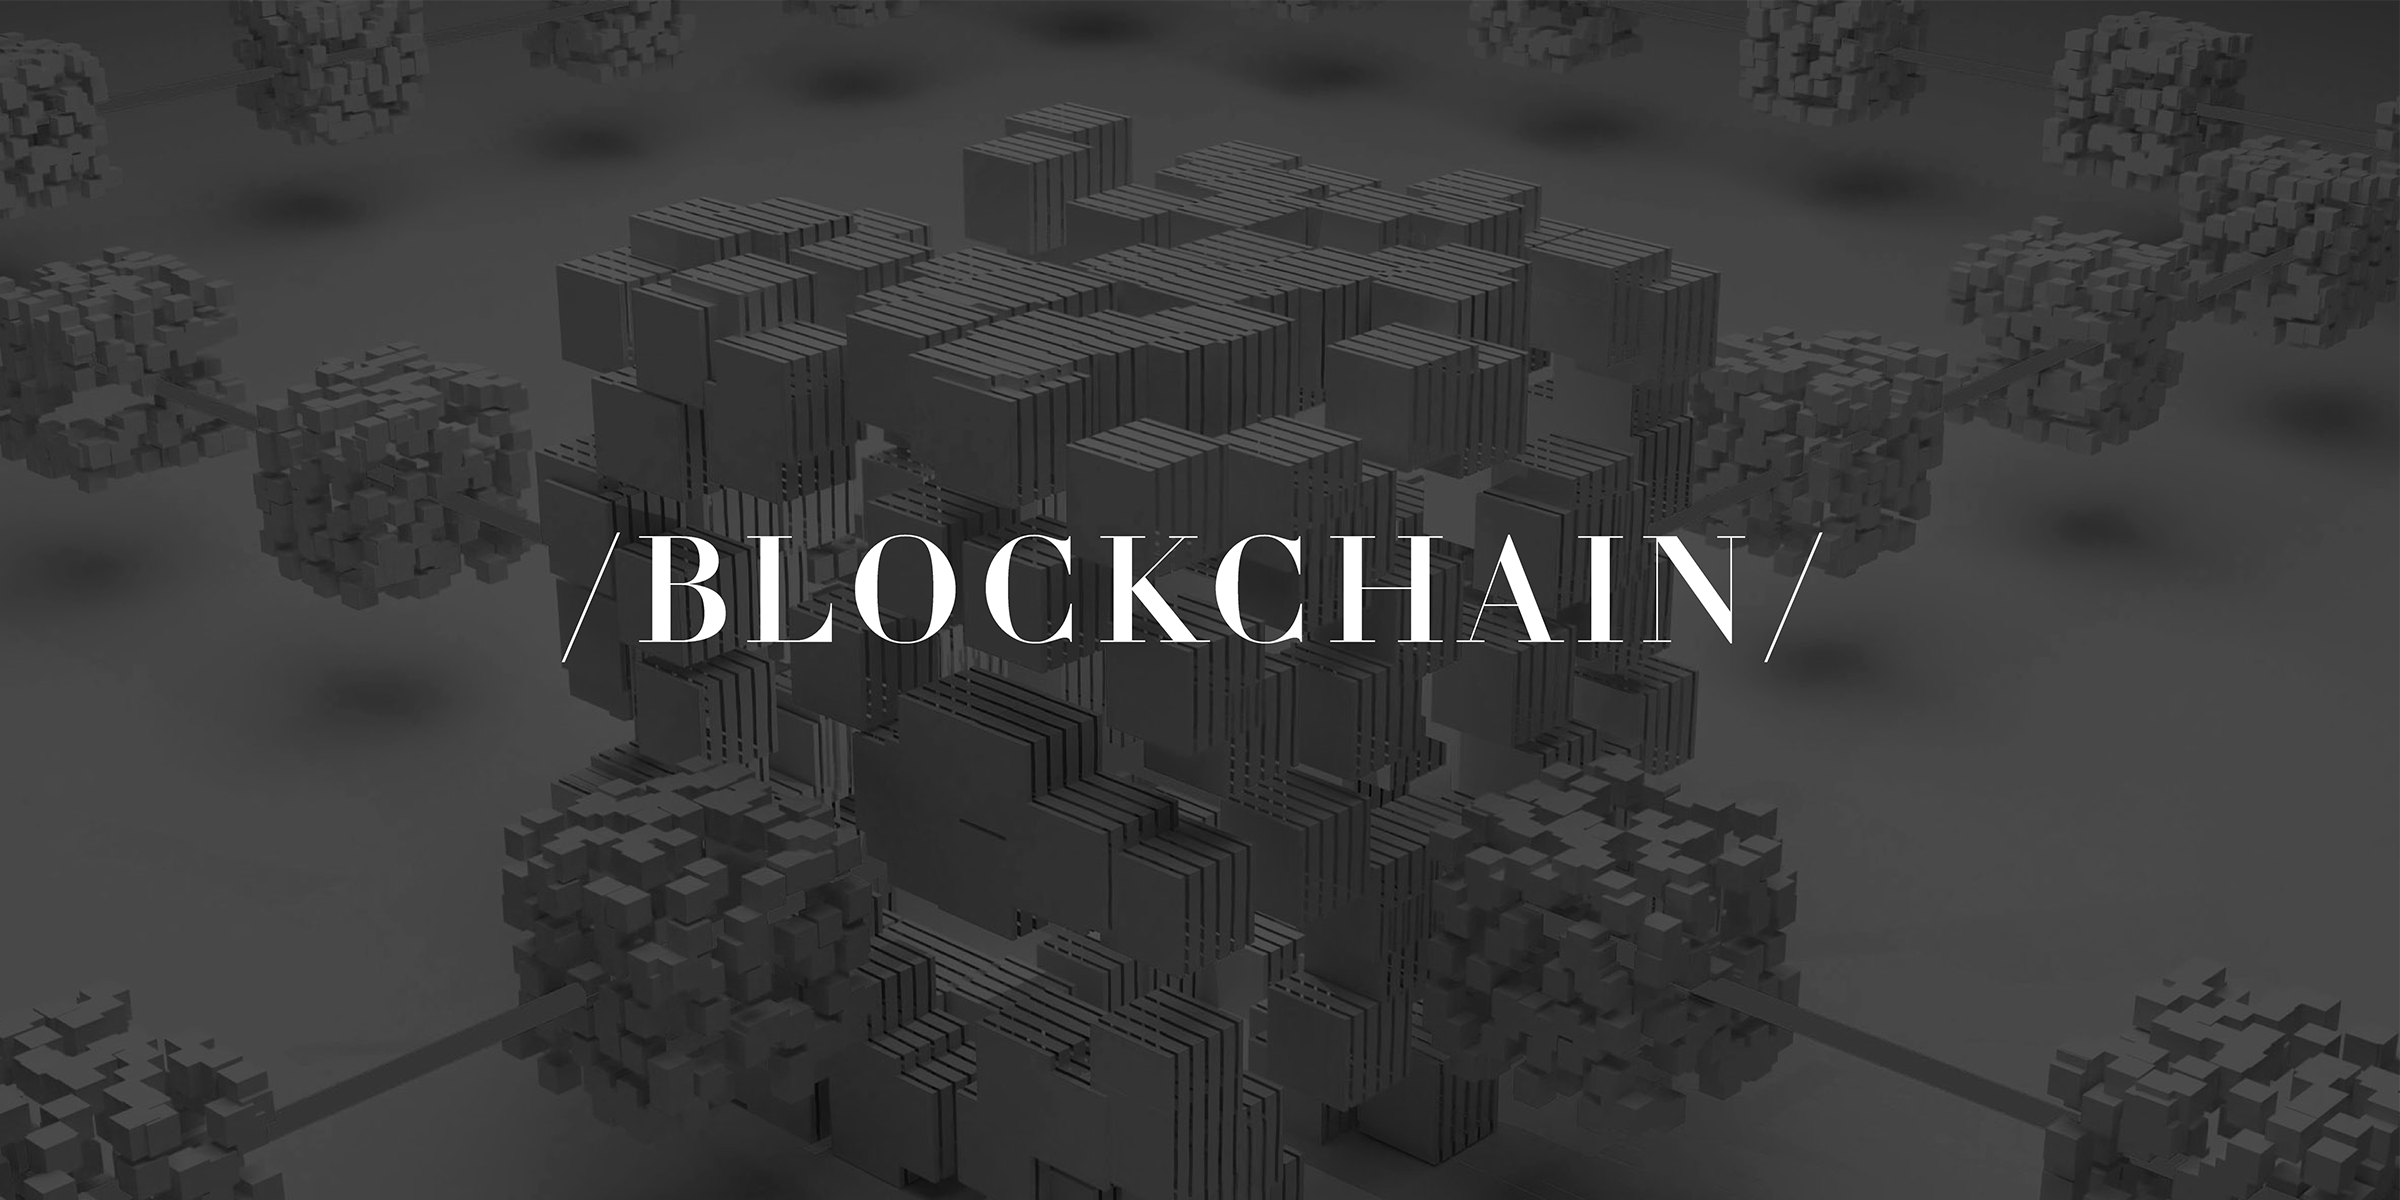 Minecraft blocks the blockchain from its block game